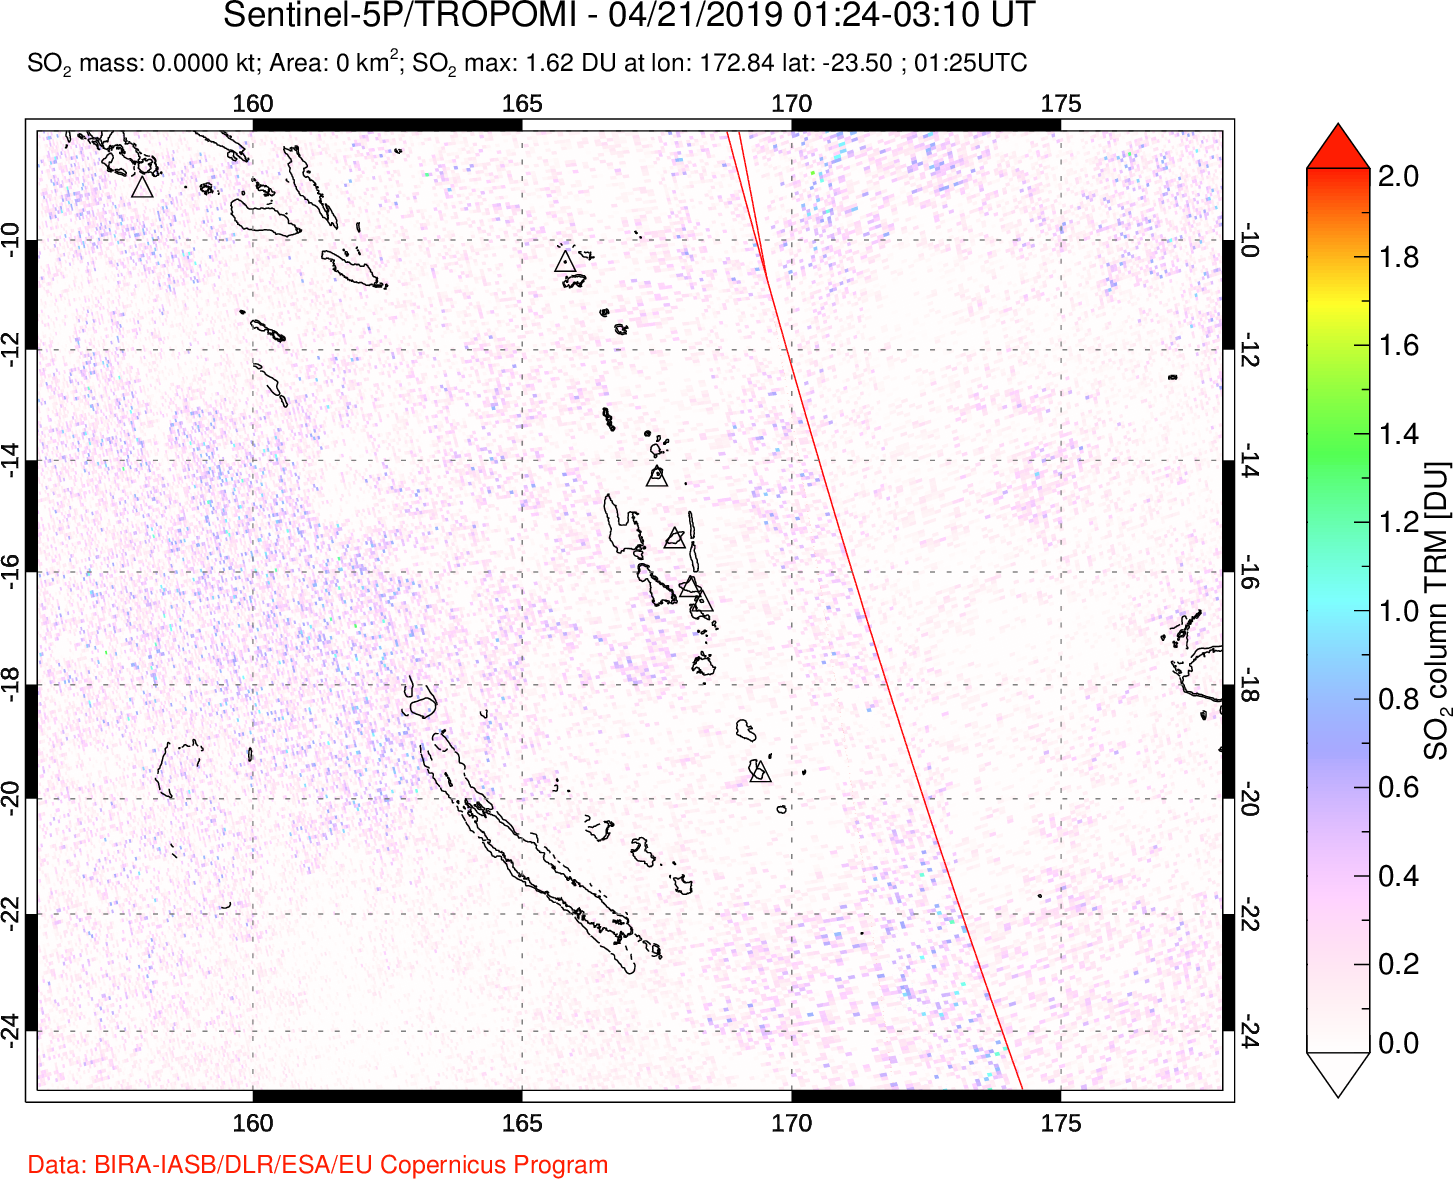 A sulfur dioxide image over Vanuatu, South Pacific on Apr 21, 2019.